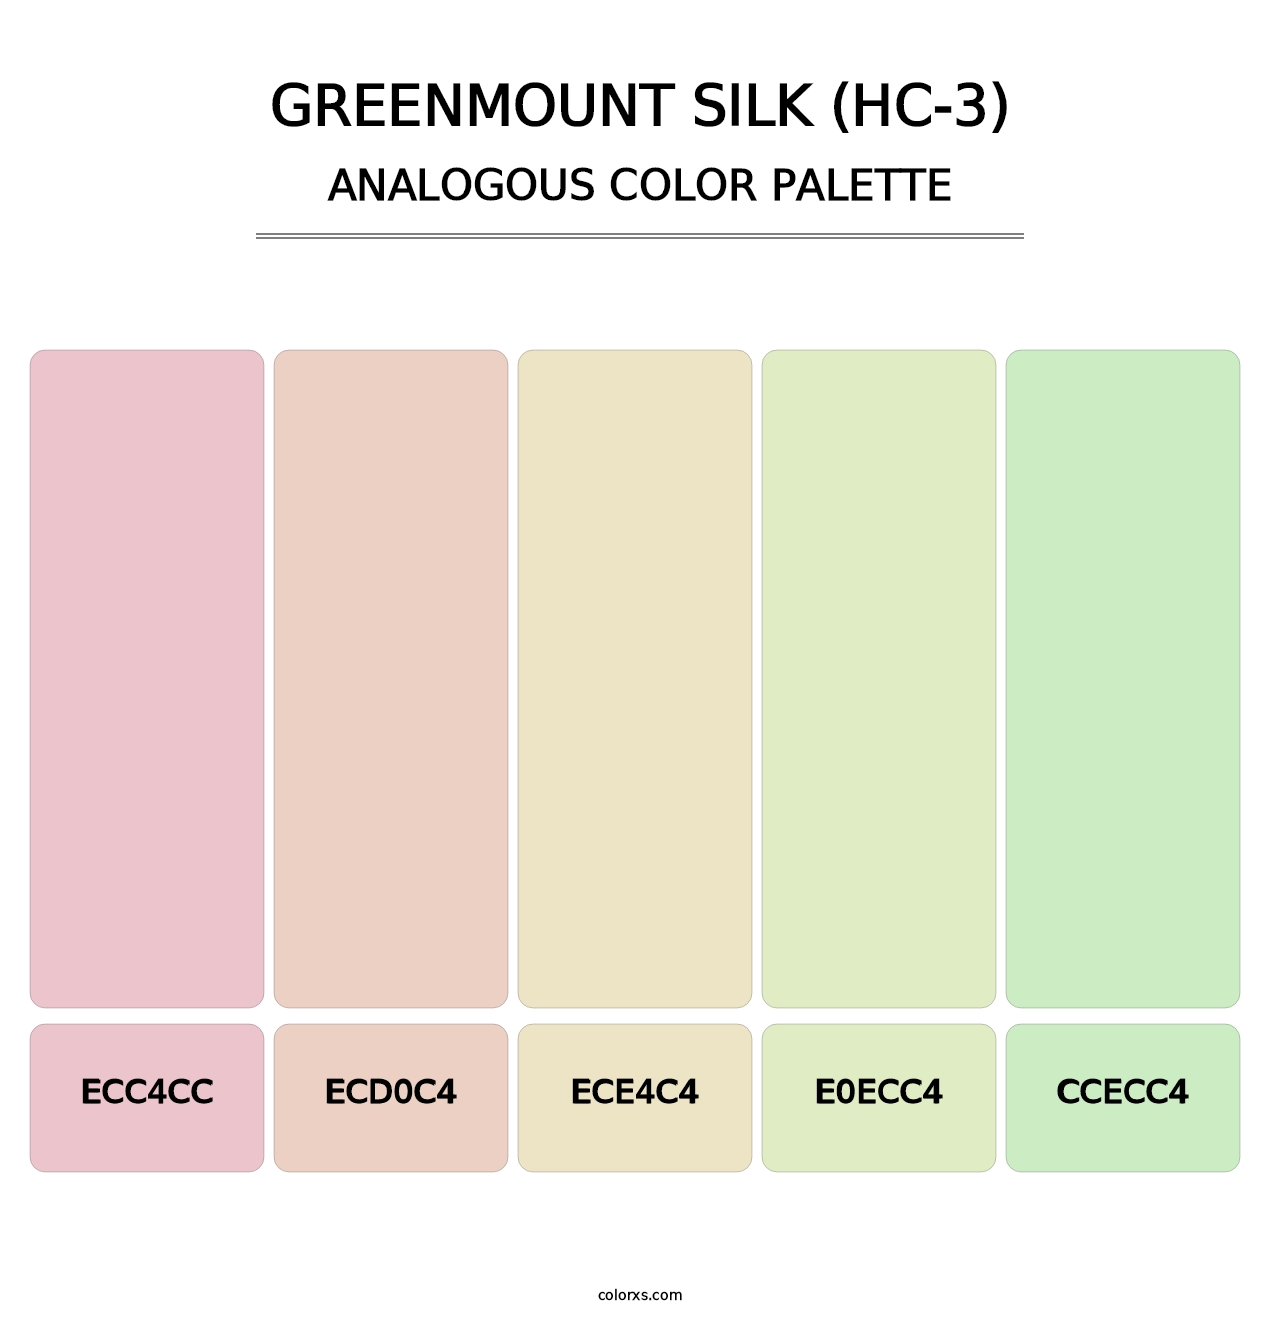 Greenmount Silk (HC-3) - Analogous Color Palette